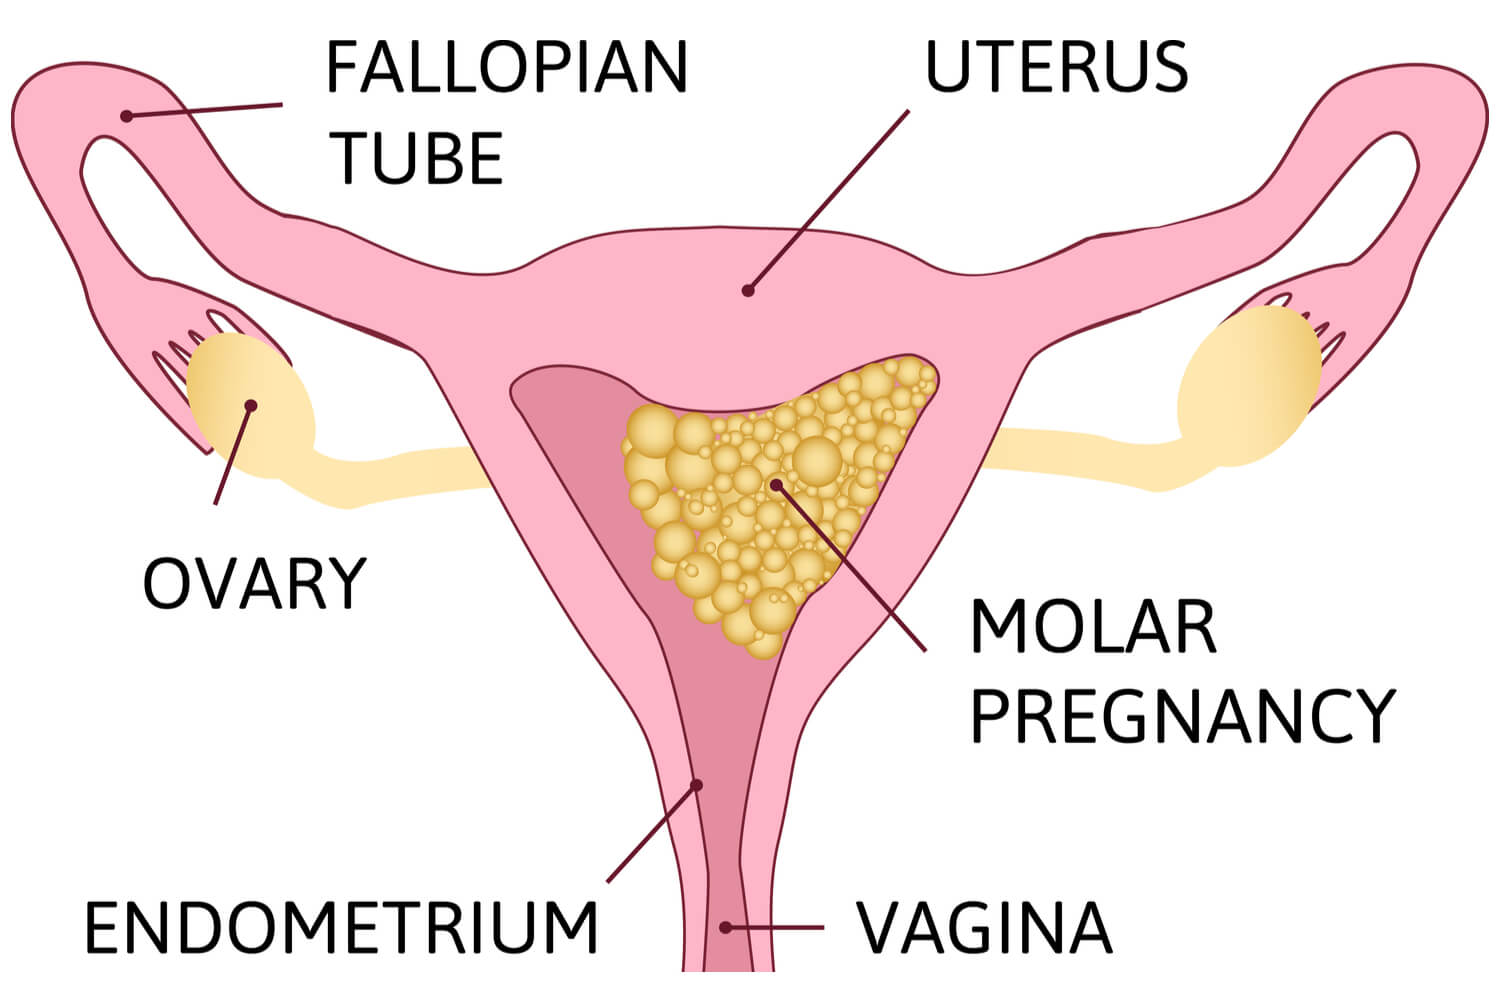 molar pregnancy